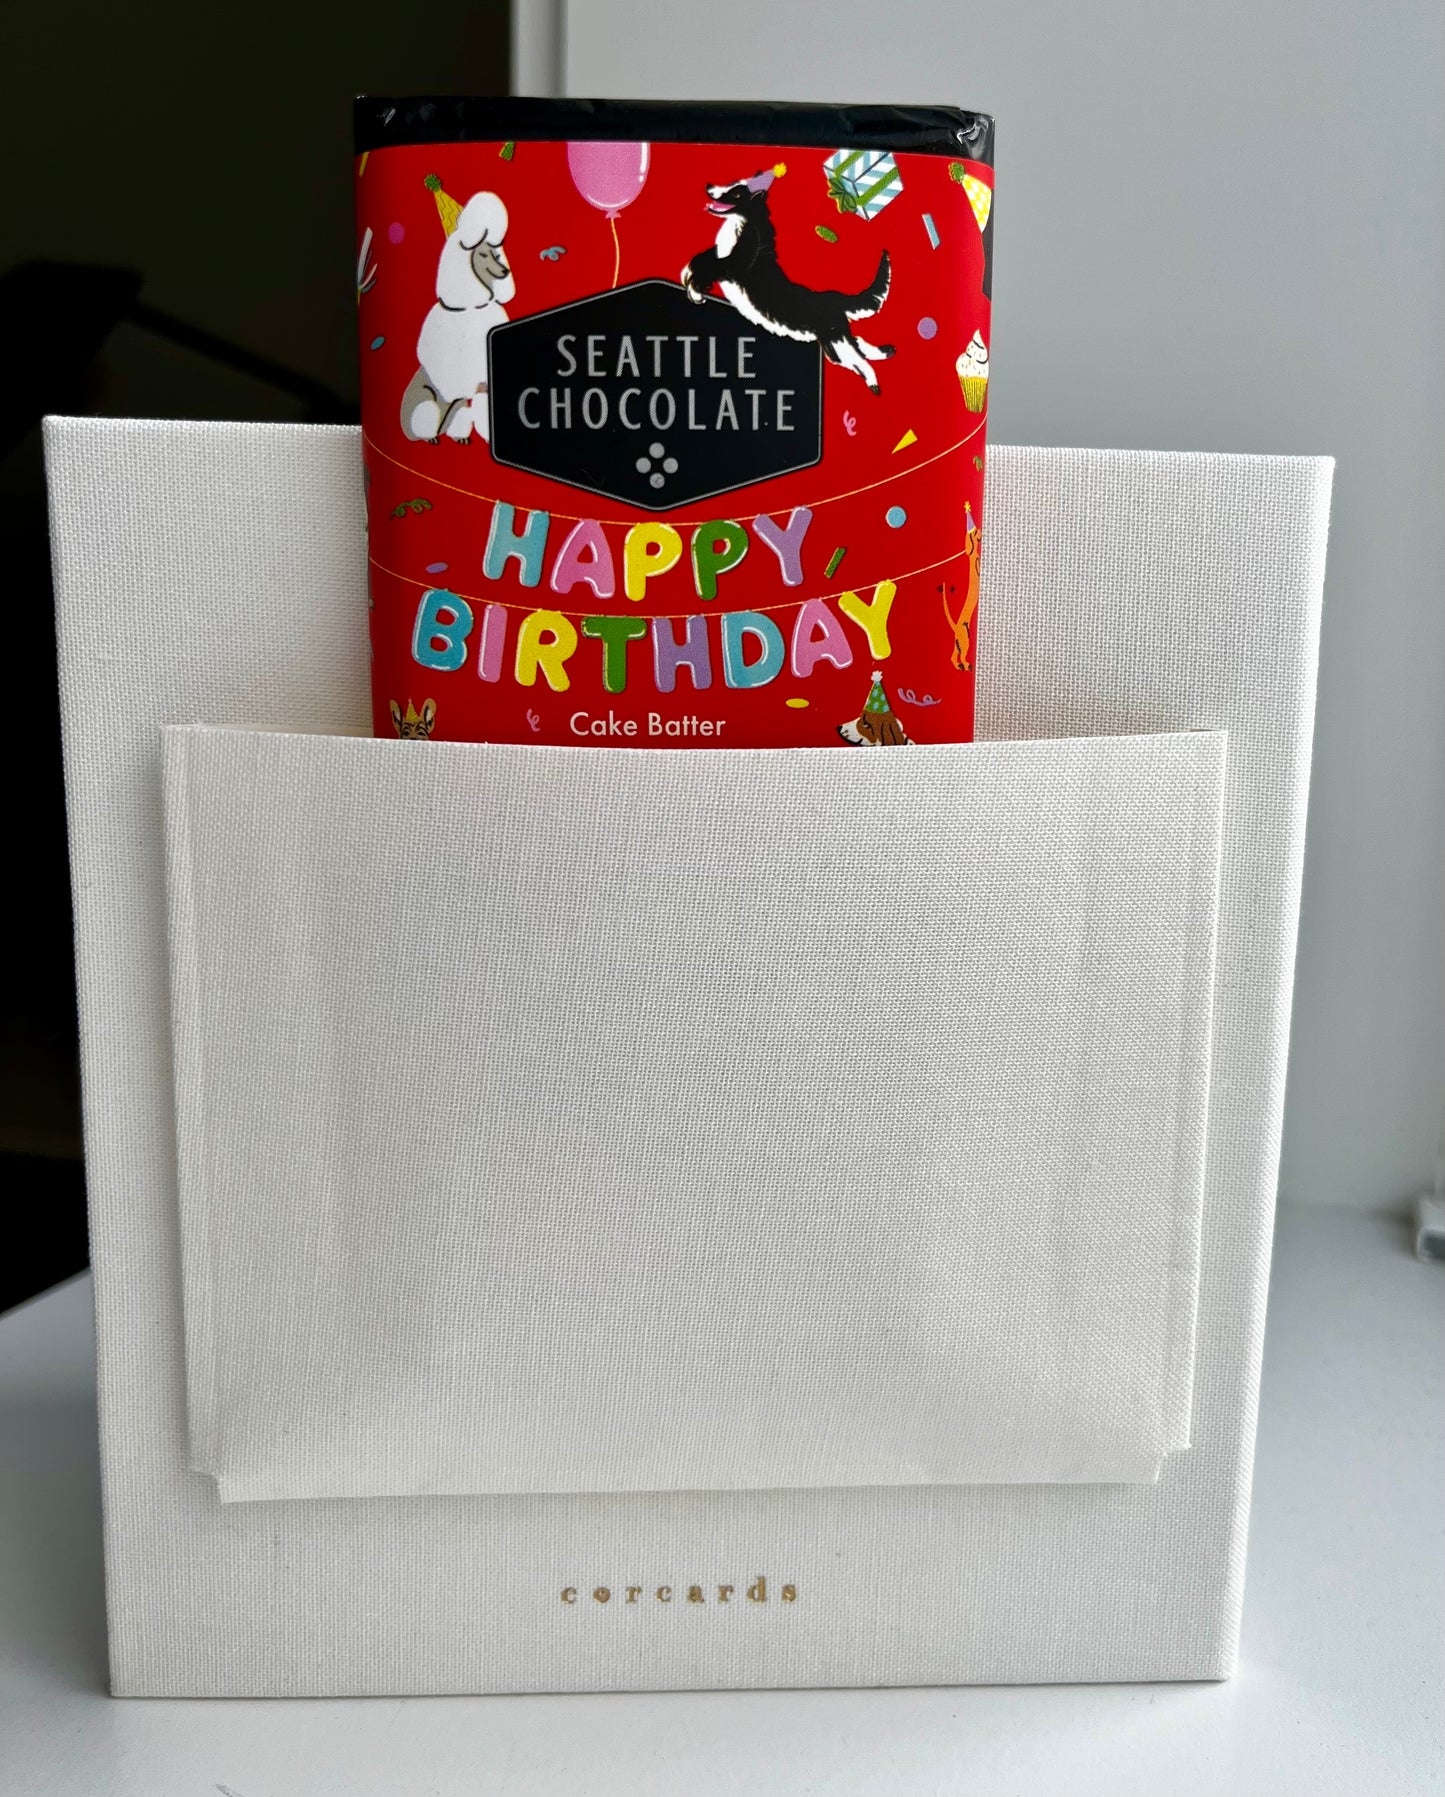 Modern Gift Card Holder- Ivory White 'Thank you'